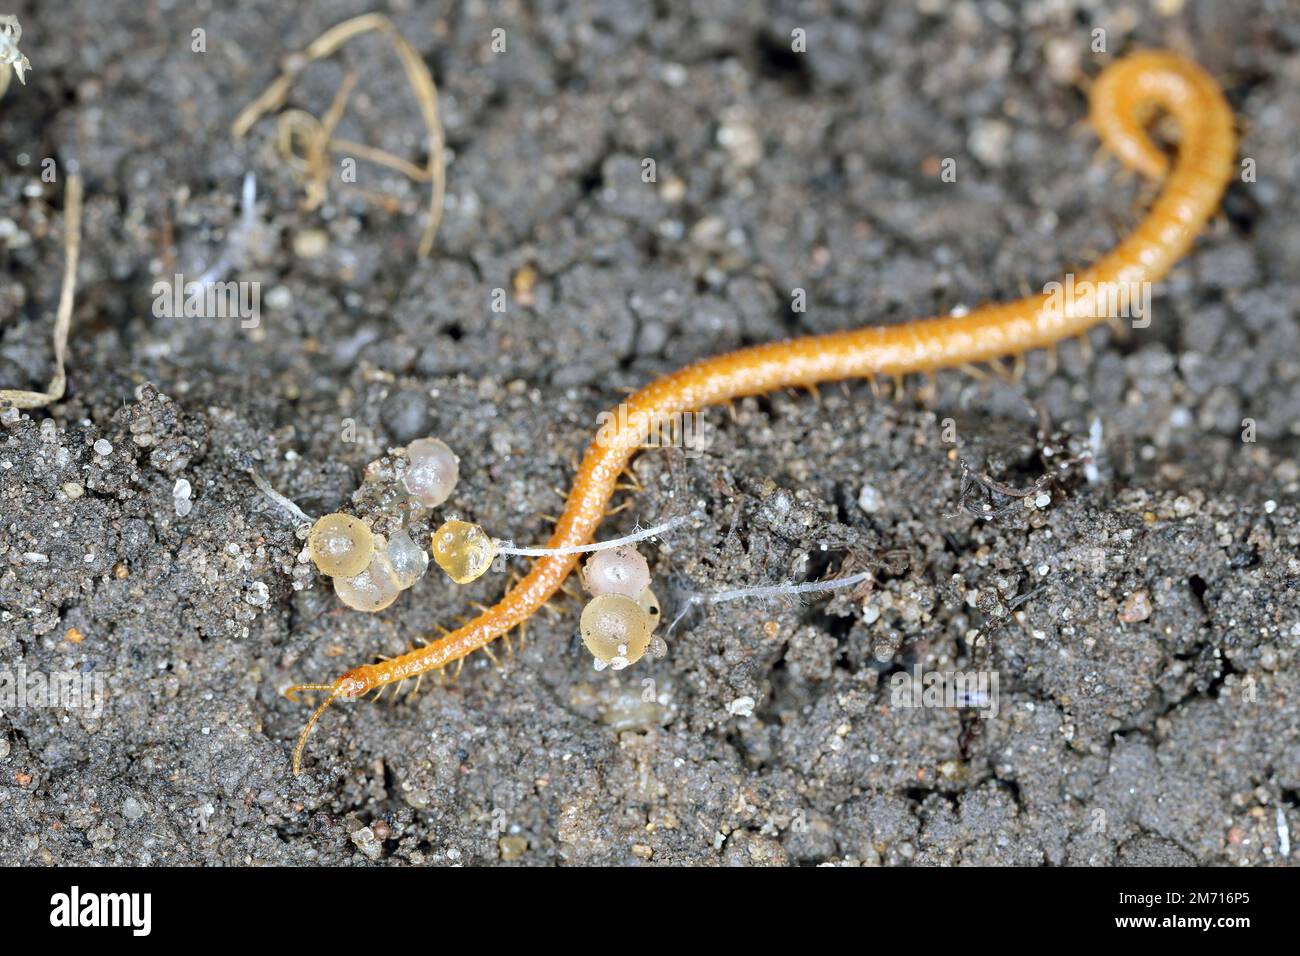 Centipede, Geophilidae, Geophilus proximus in soil, macro photo. Stock Photo